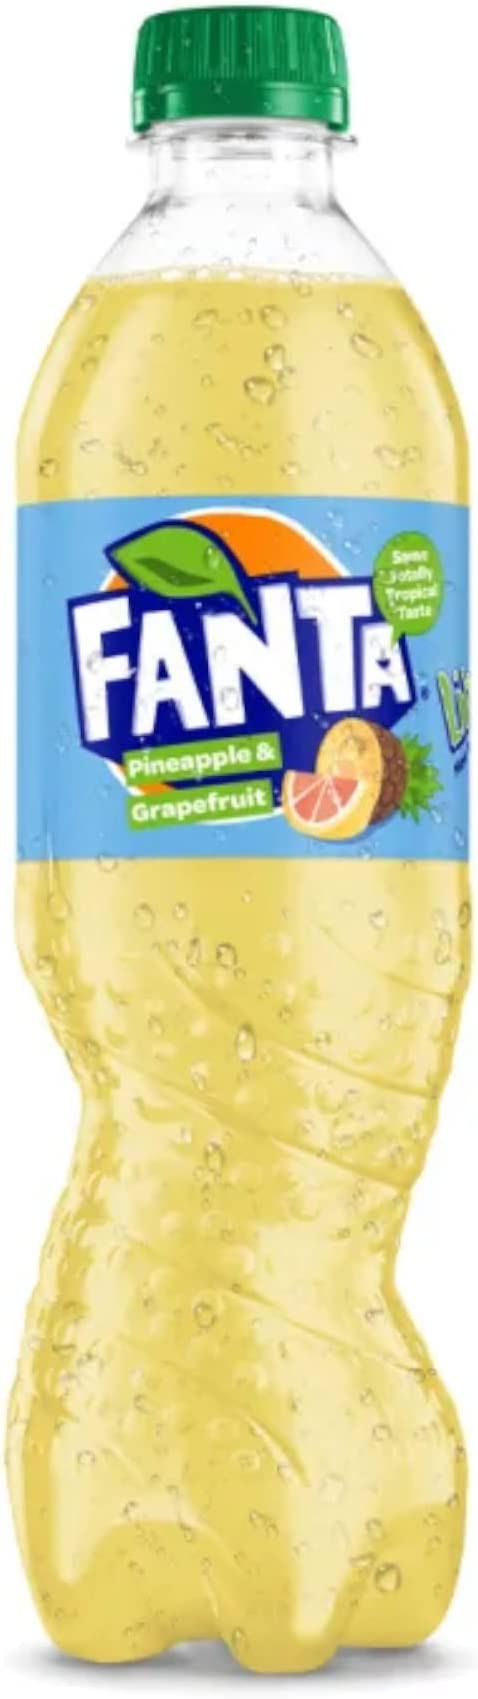 Fanta pineapple and grapefruit - 12x500ml